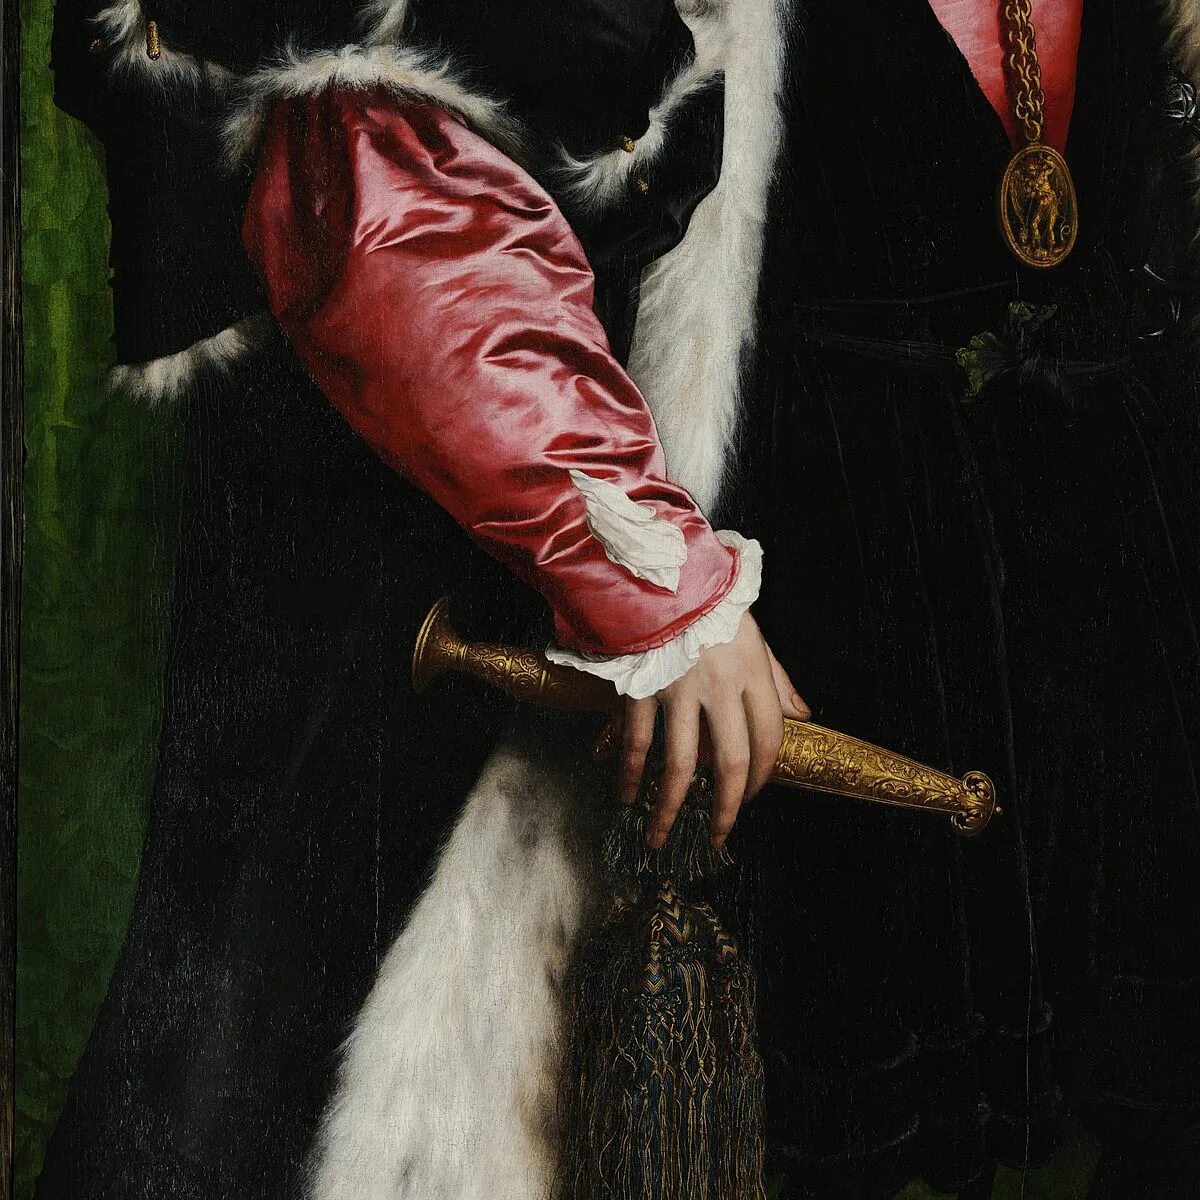 Ганс послы. Ганс Гольбейн послы. Ганс Гольбейн послы 1533. Hans Holbein, the Ambassadors, 1533. Картина послы Ганса Гольбейна.